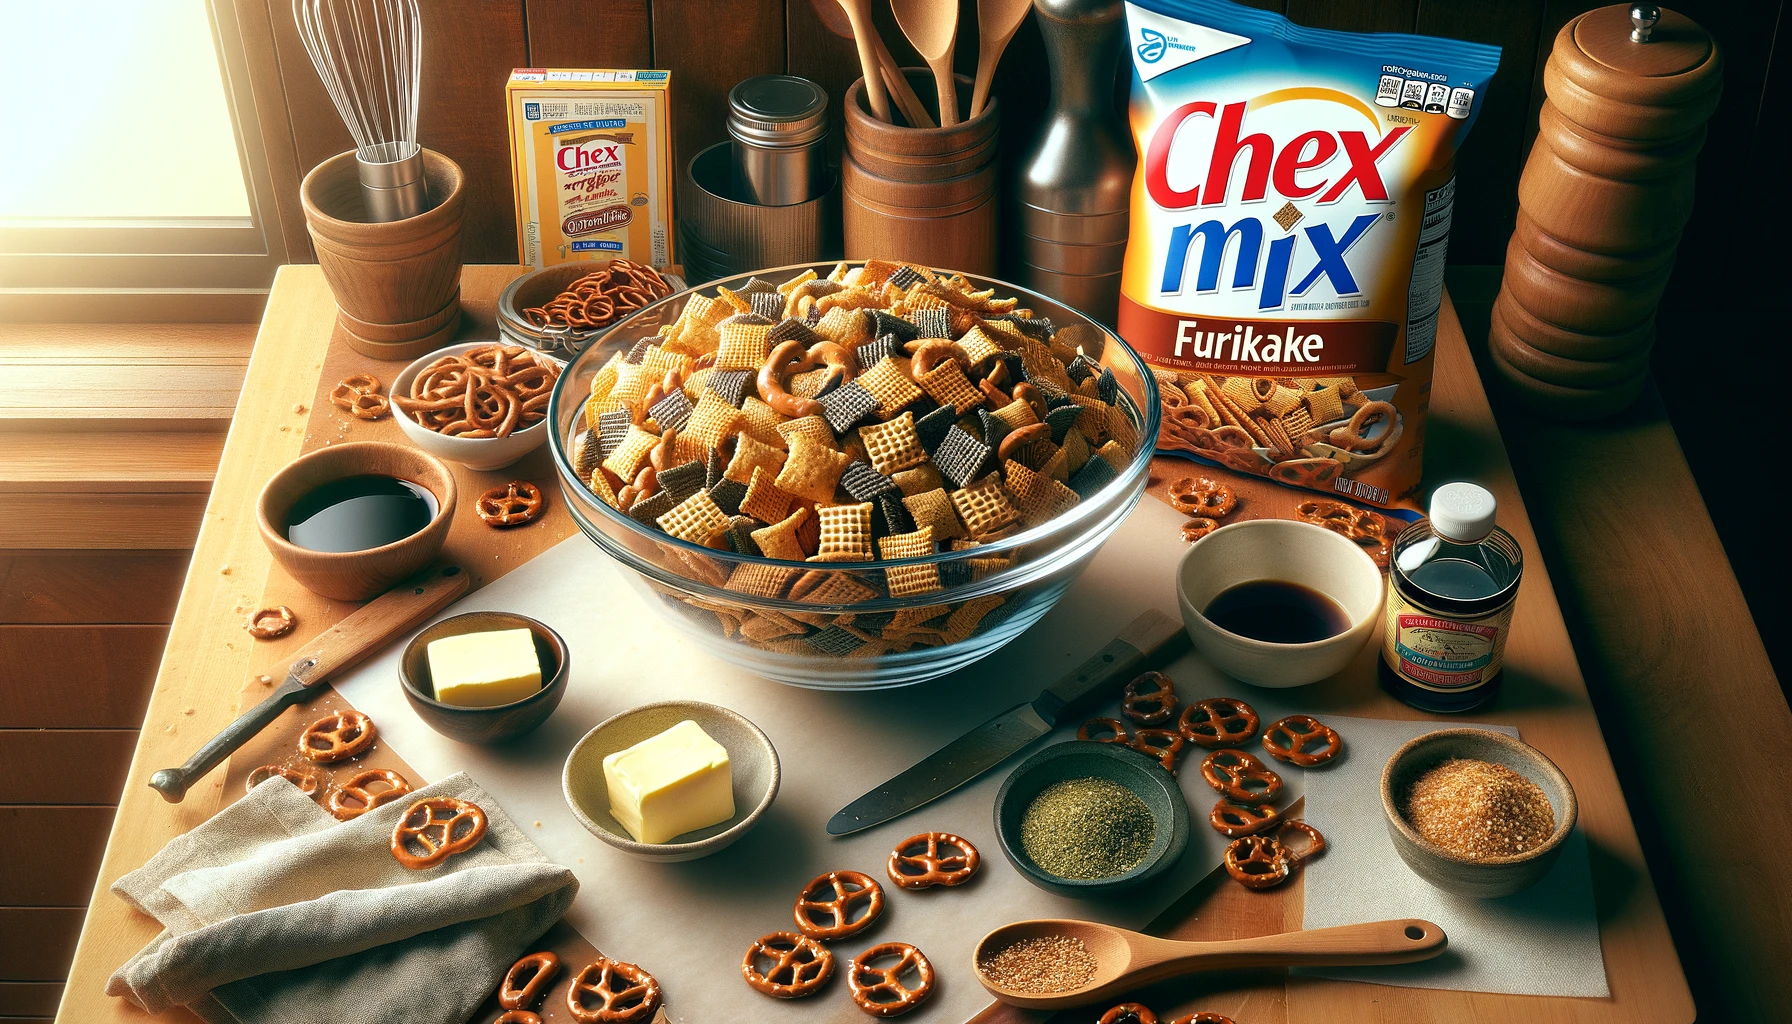 chex mix furikake recipes